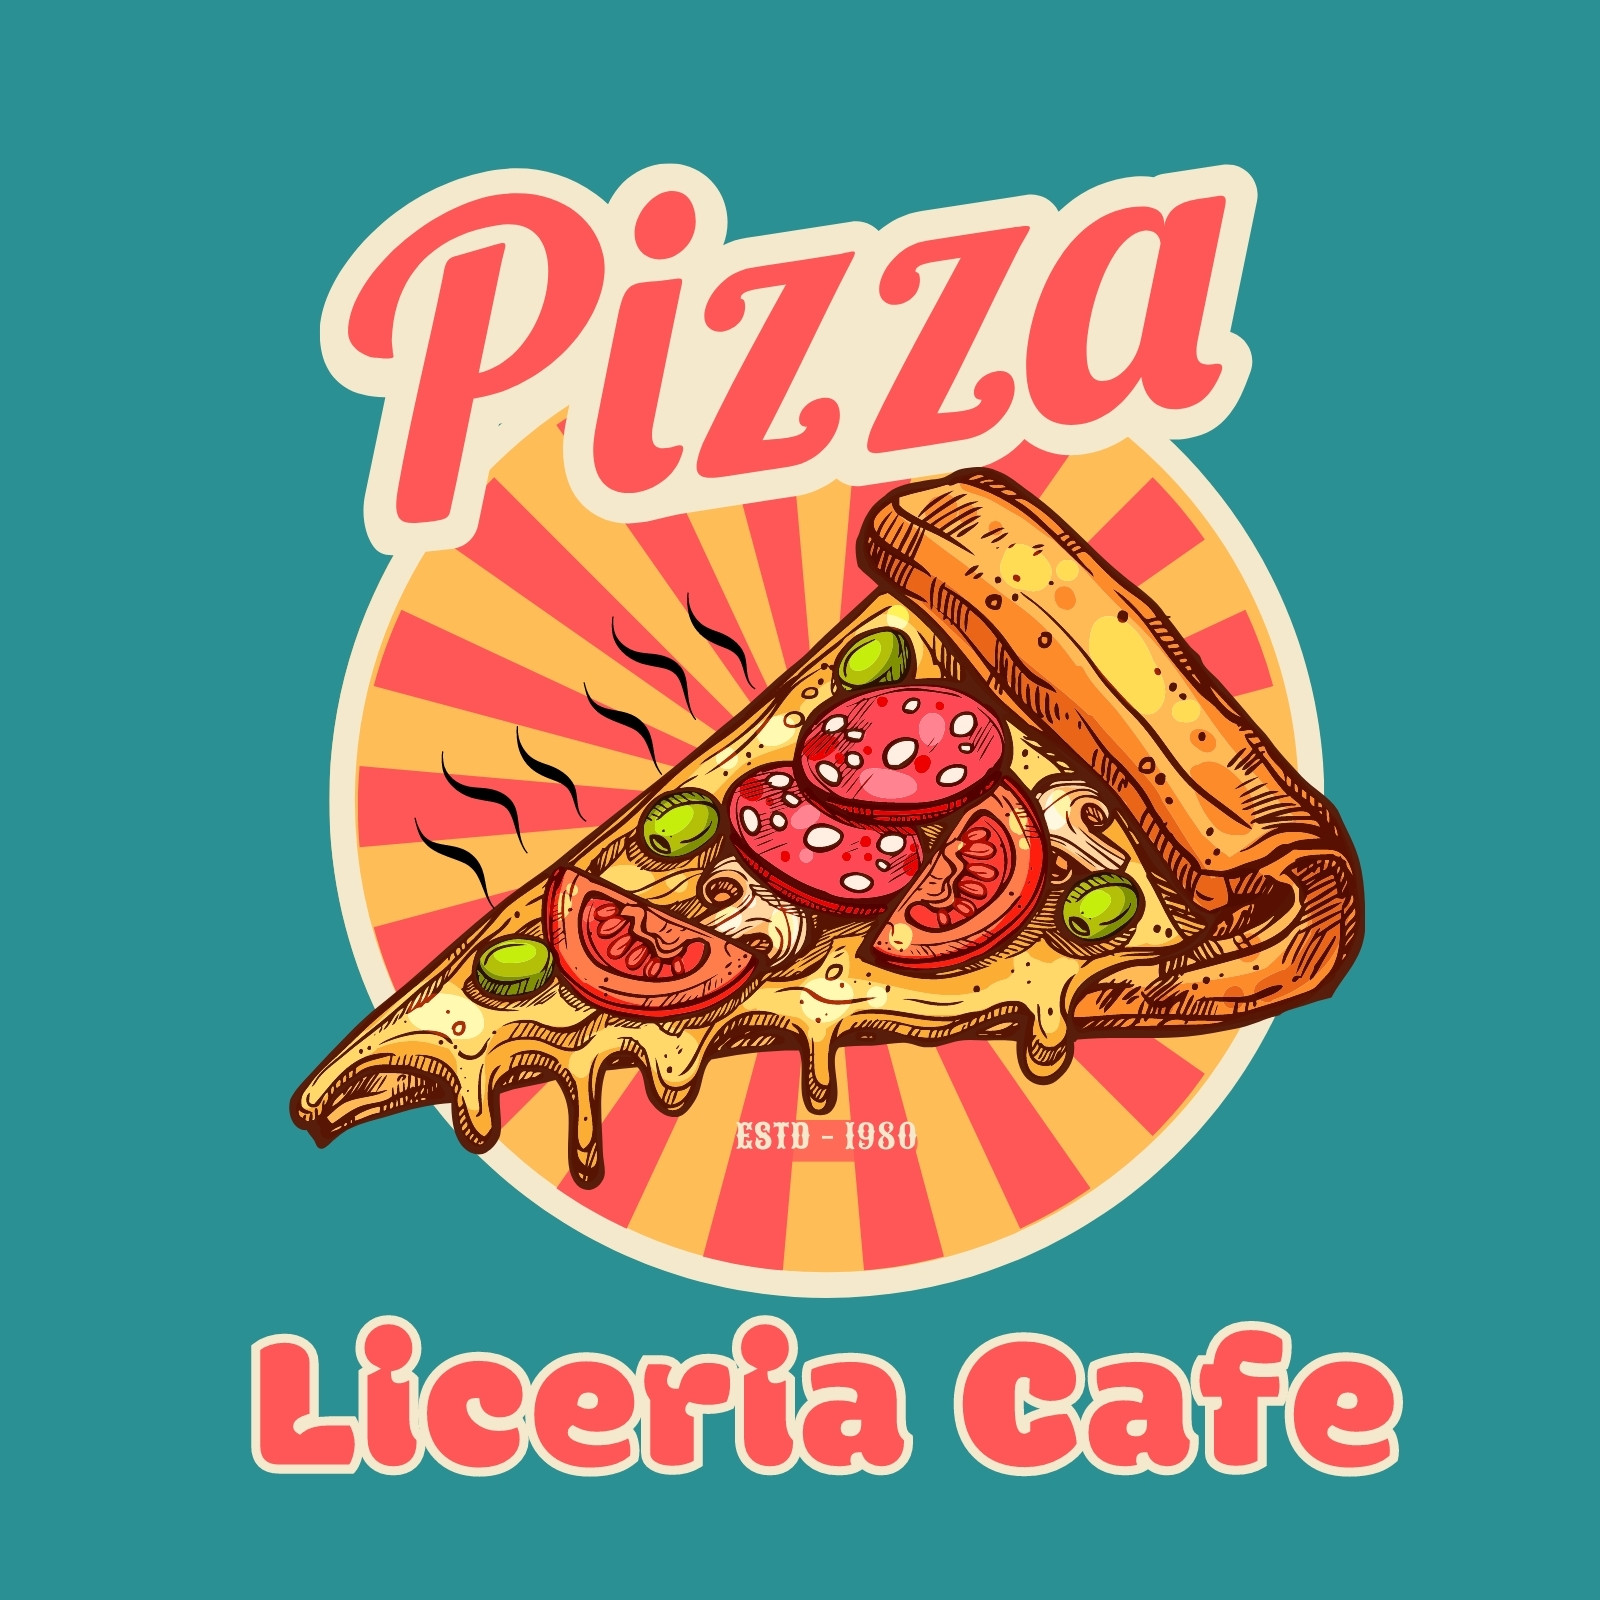 red pizza restaurant logos